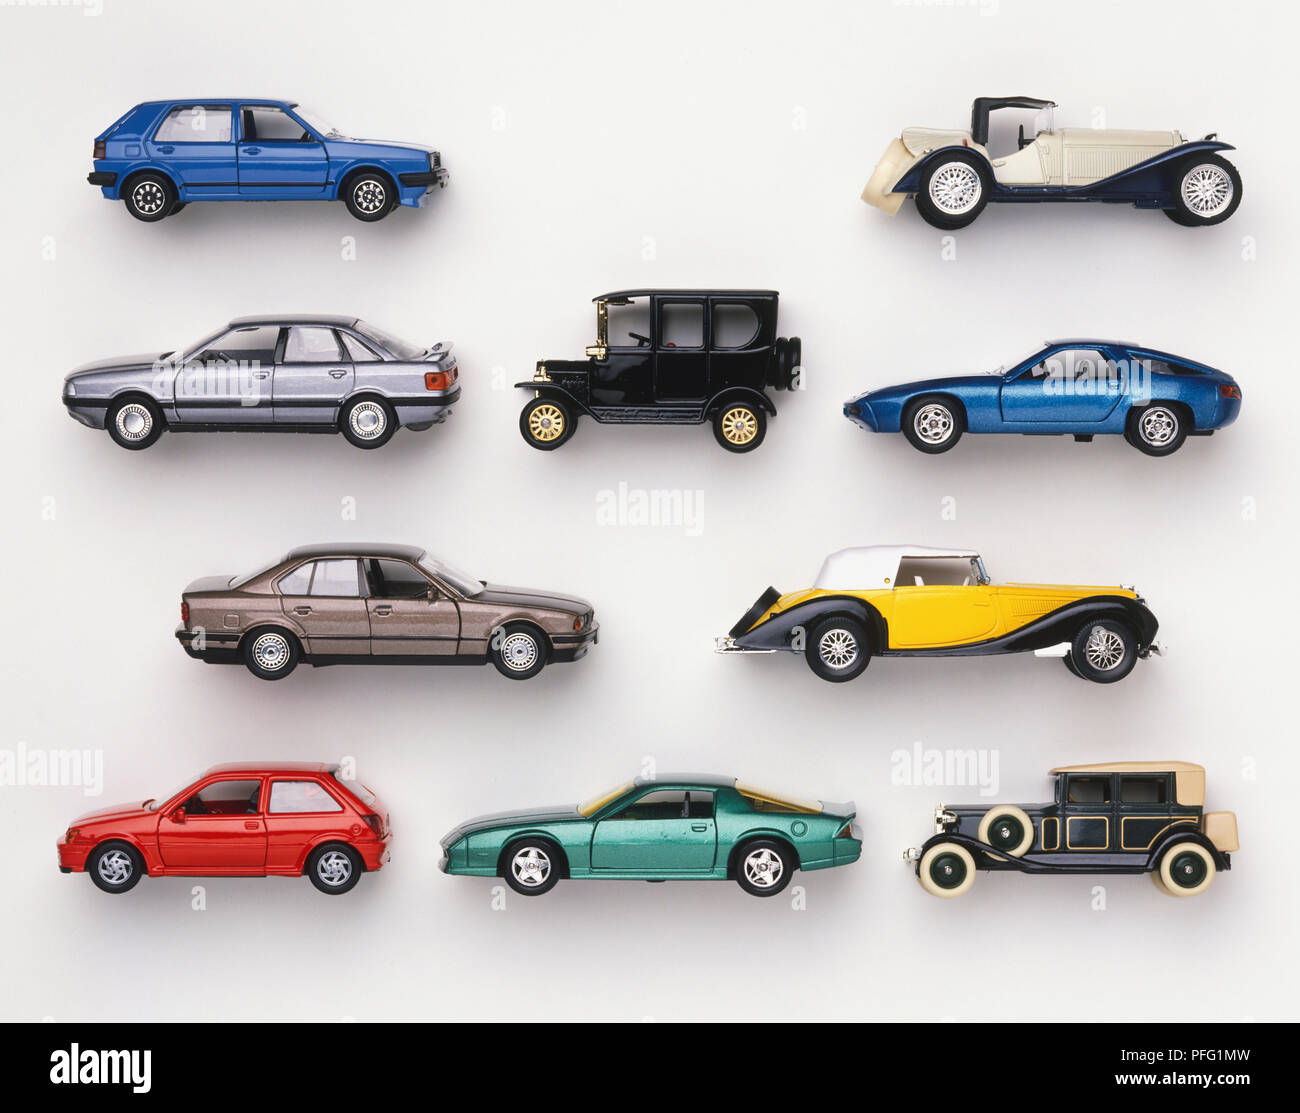 Ten toy cars. Stock Photo